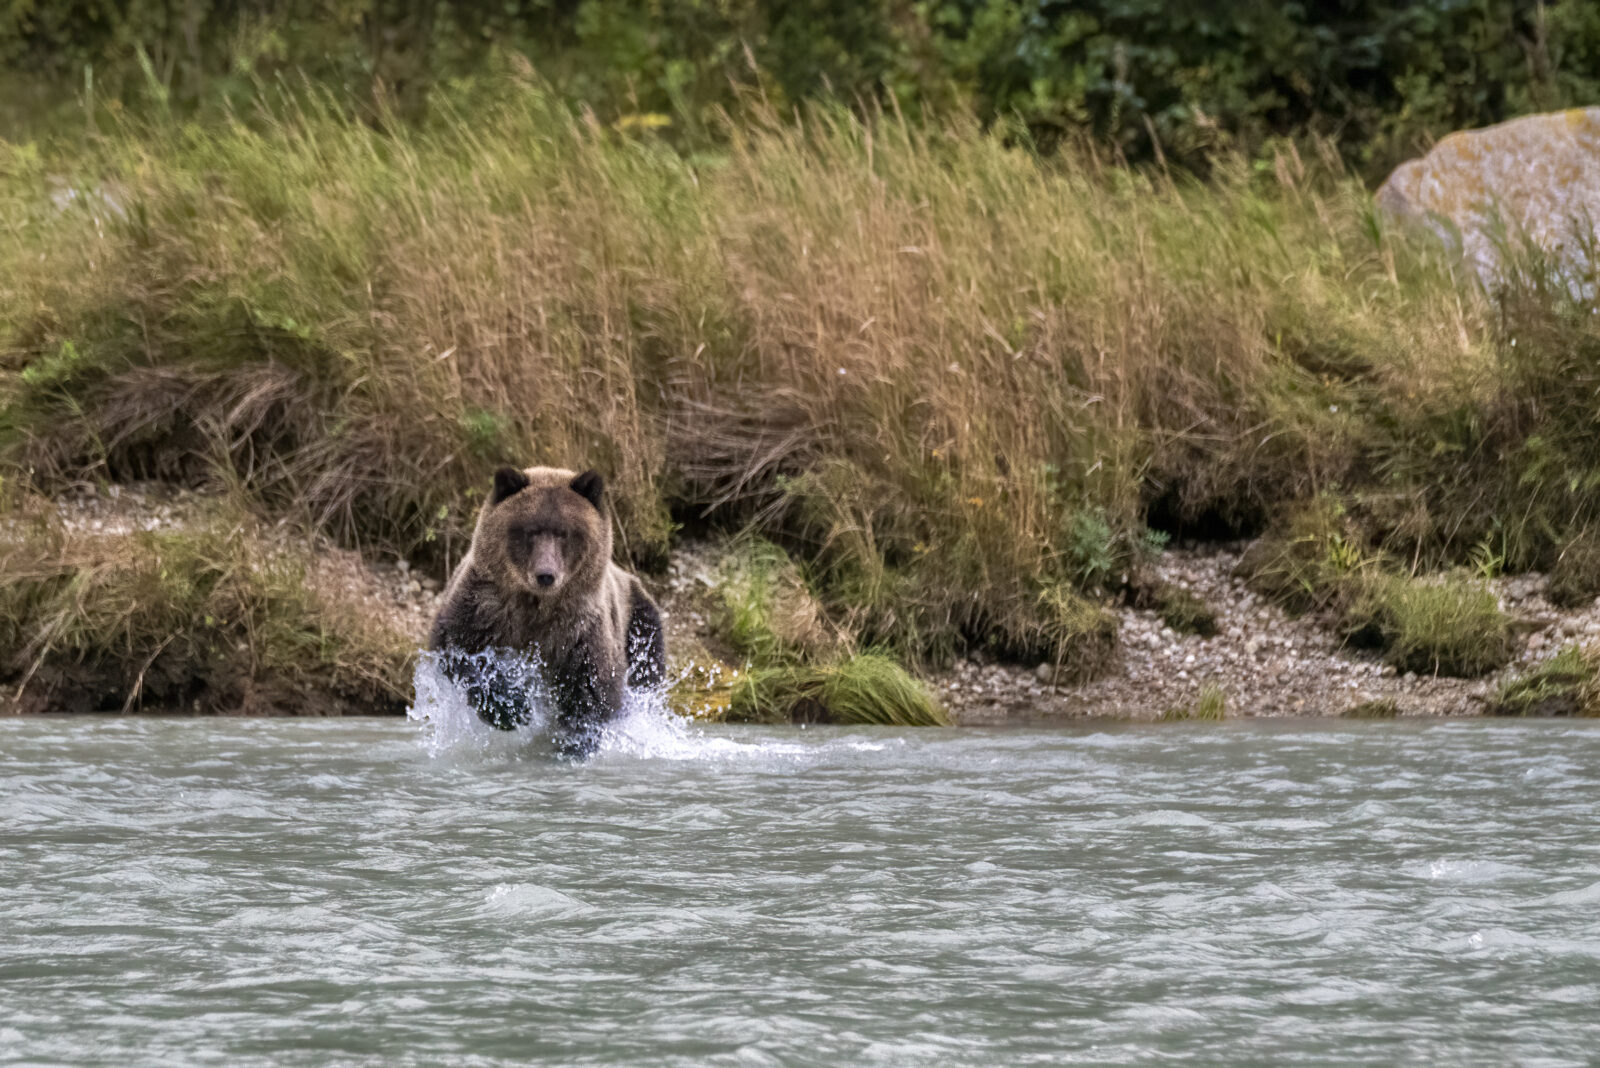 A brown bear running through a river.